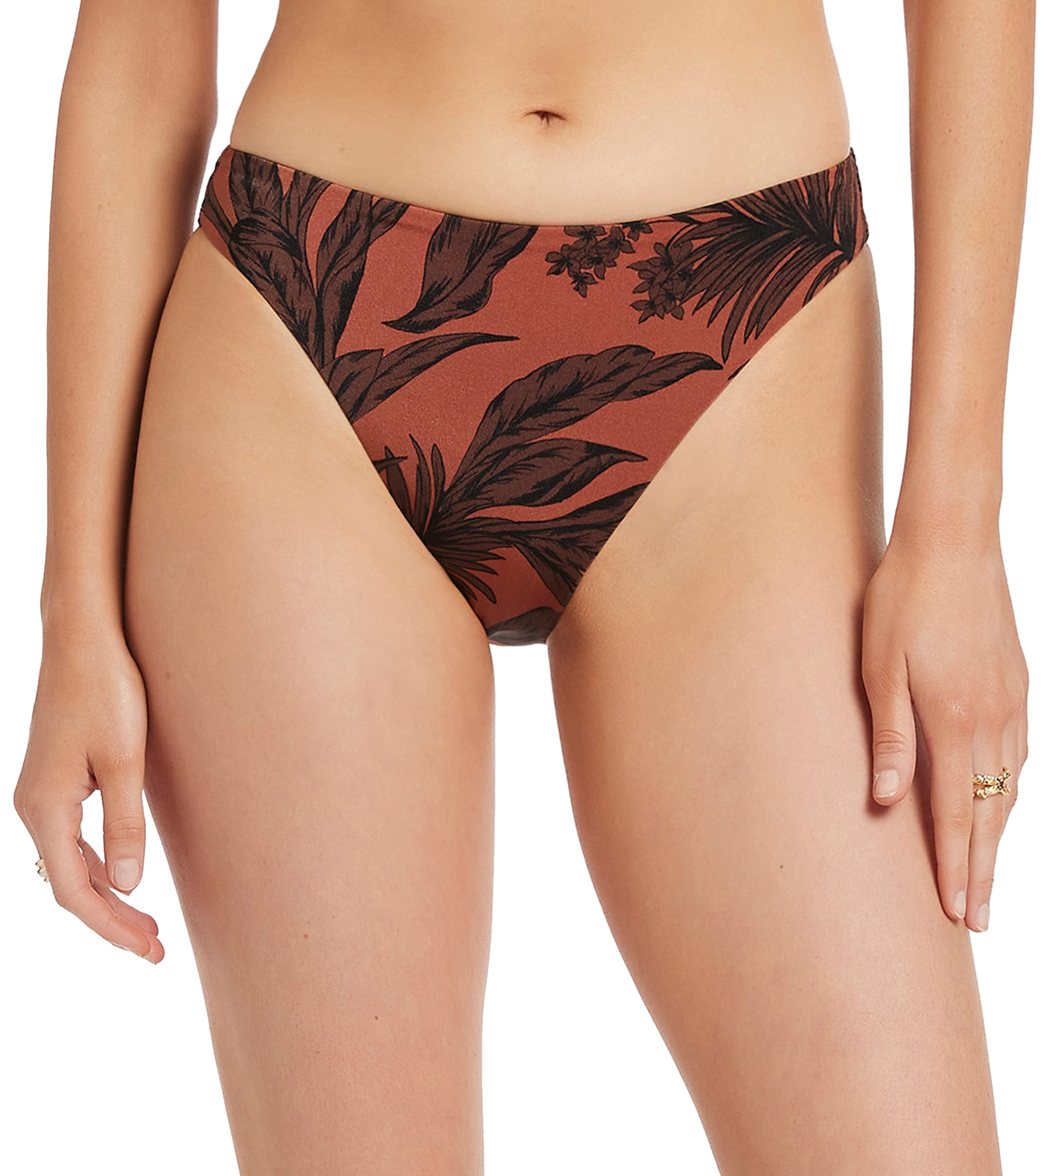 Jets Swimwear Australia Women's Desert Palm High Leg Bikini Bottom - Terracotta 6 - Swimoutlet.com